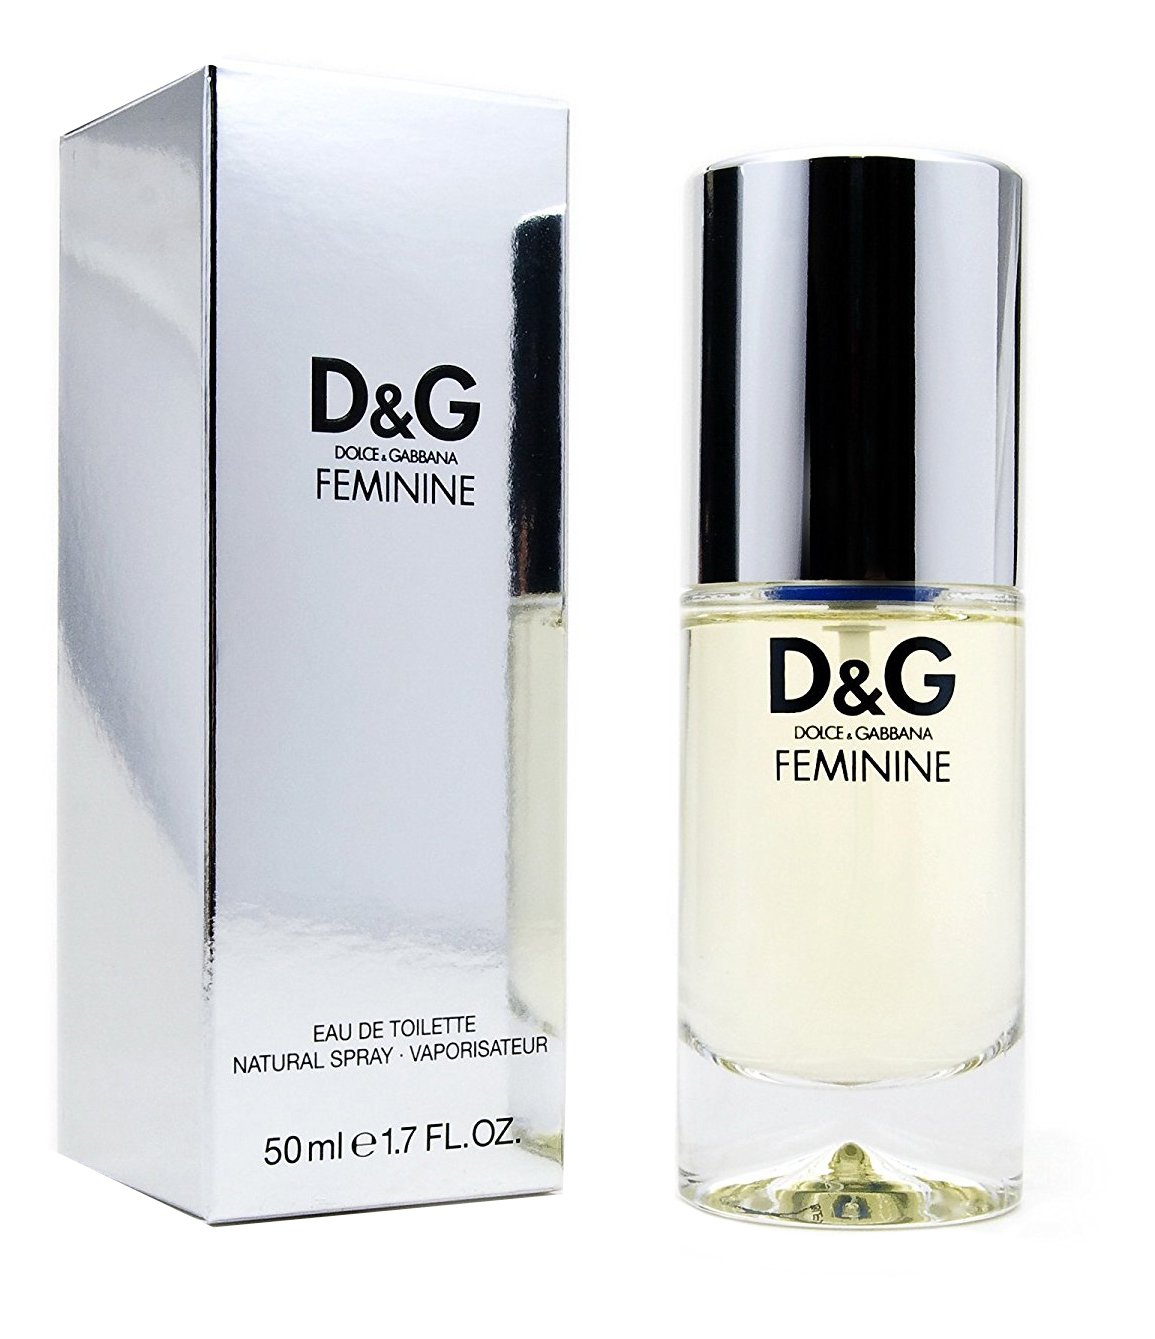 dolce and gabbana feminine perfume discontinued